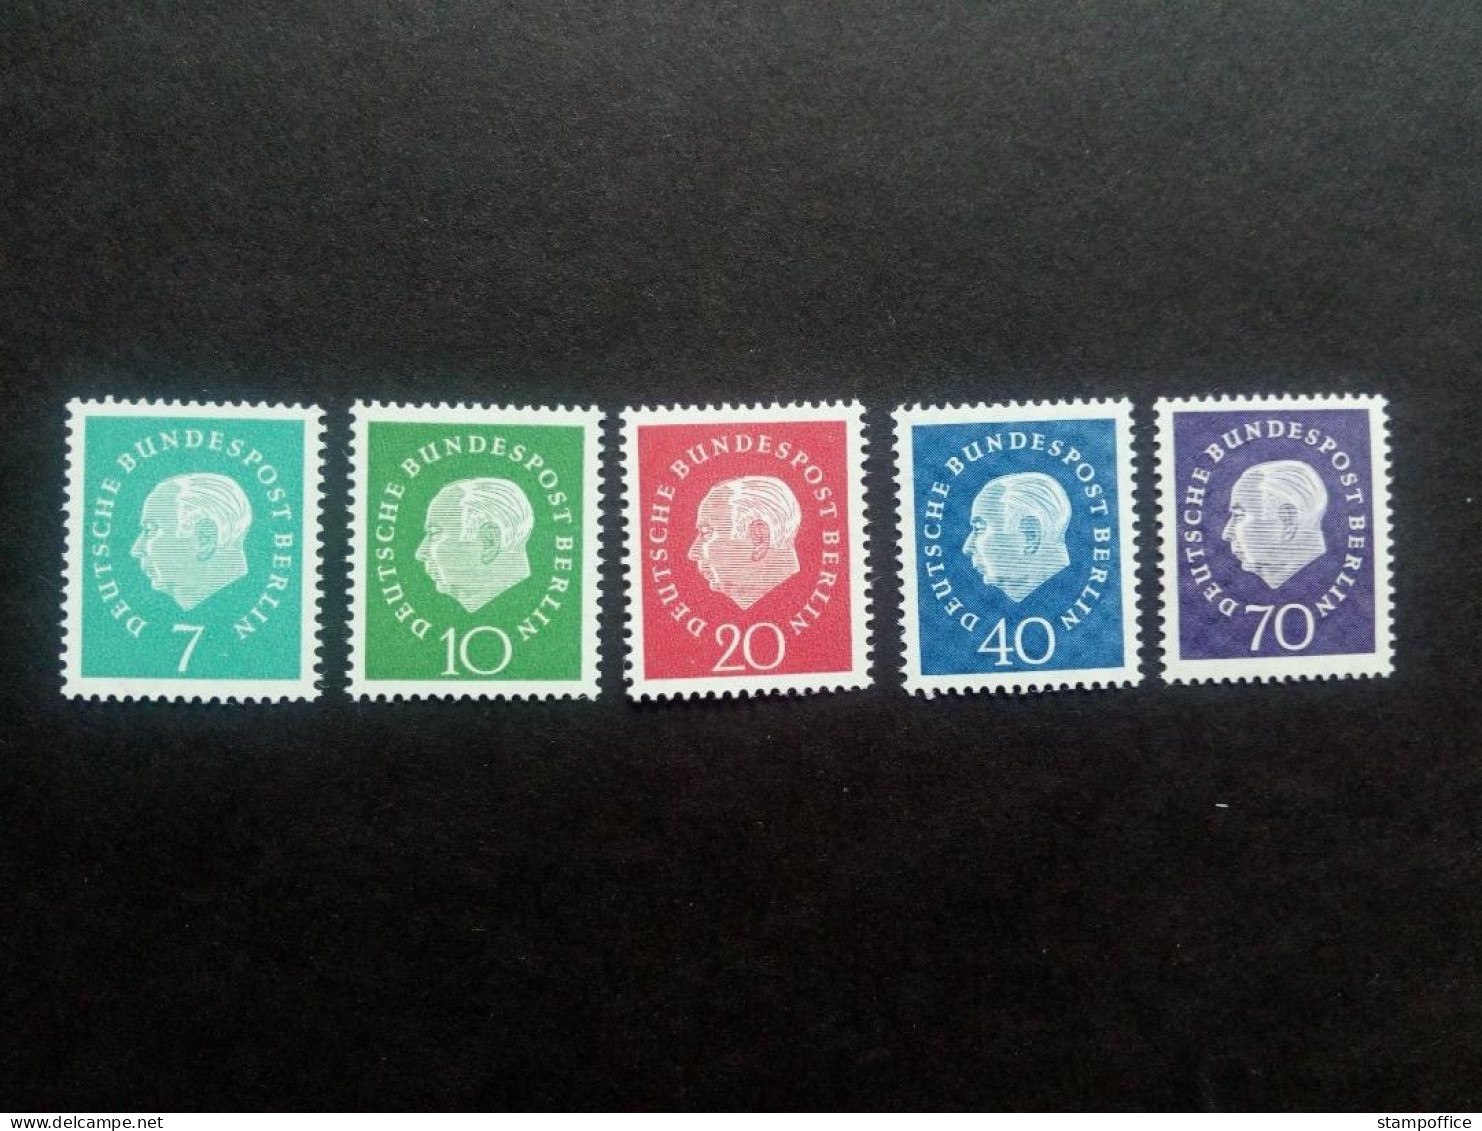 BERLIN MI-NR. 182-186 POSTFRISCH(MINT) BUNDESPRÄSIDENT THEODOER HEUSS 1959 - Unused Stamps